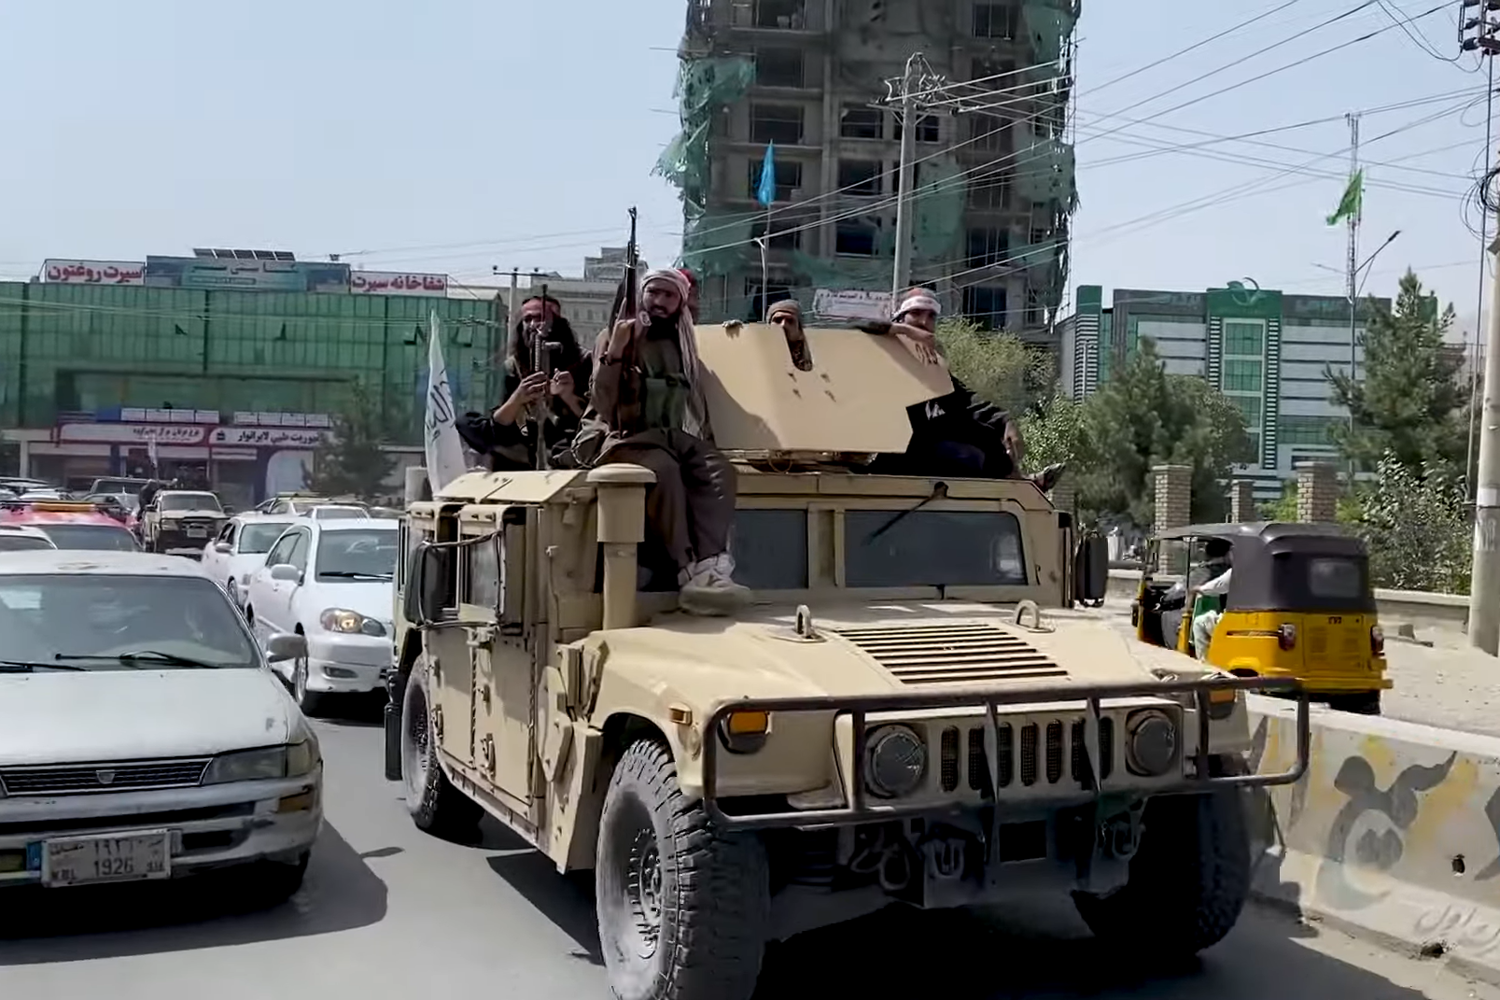 Taliban Humvee in Kabul, August 2021. Photo: Voice of America News, Public Domain, via Wikimedia Commons